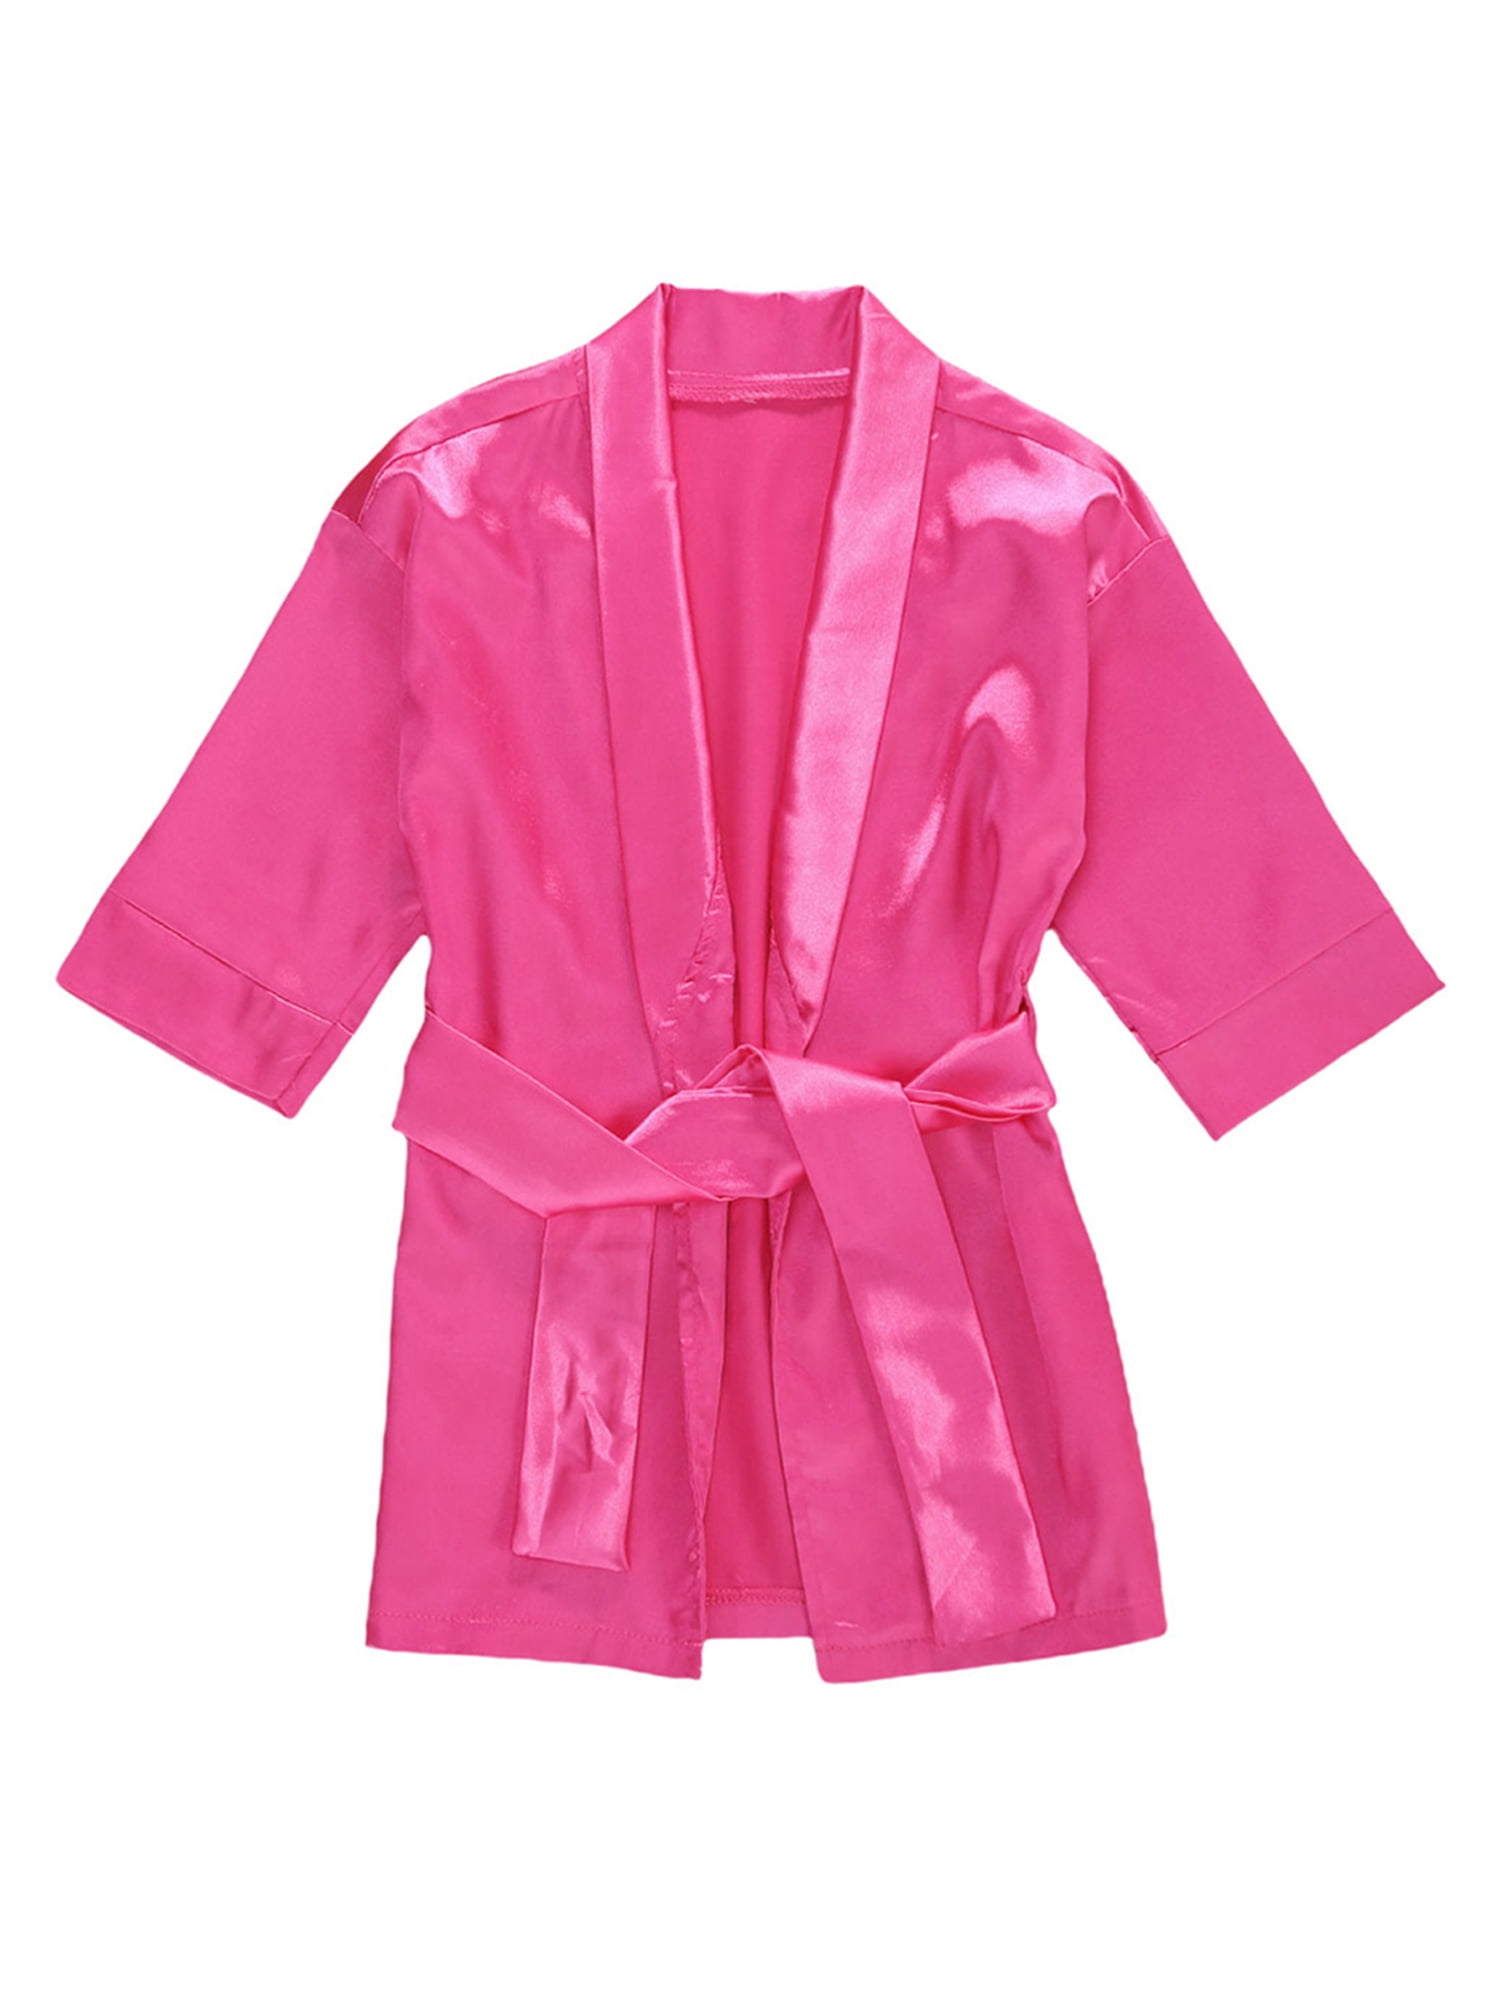 Baby Girl Silk Satin Gown Sleepwear Plain Kimono Robe Toddler Kids Nightwear Outfit 